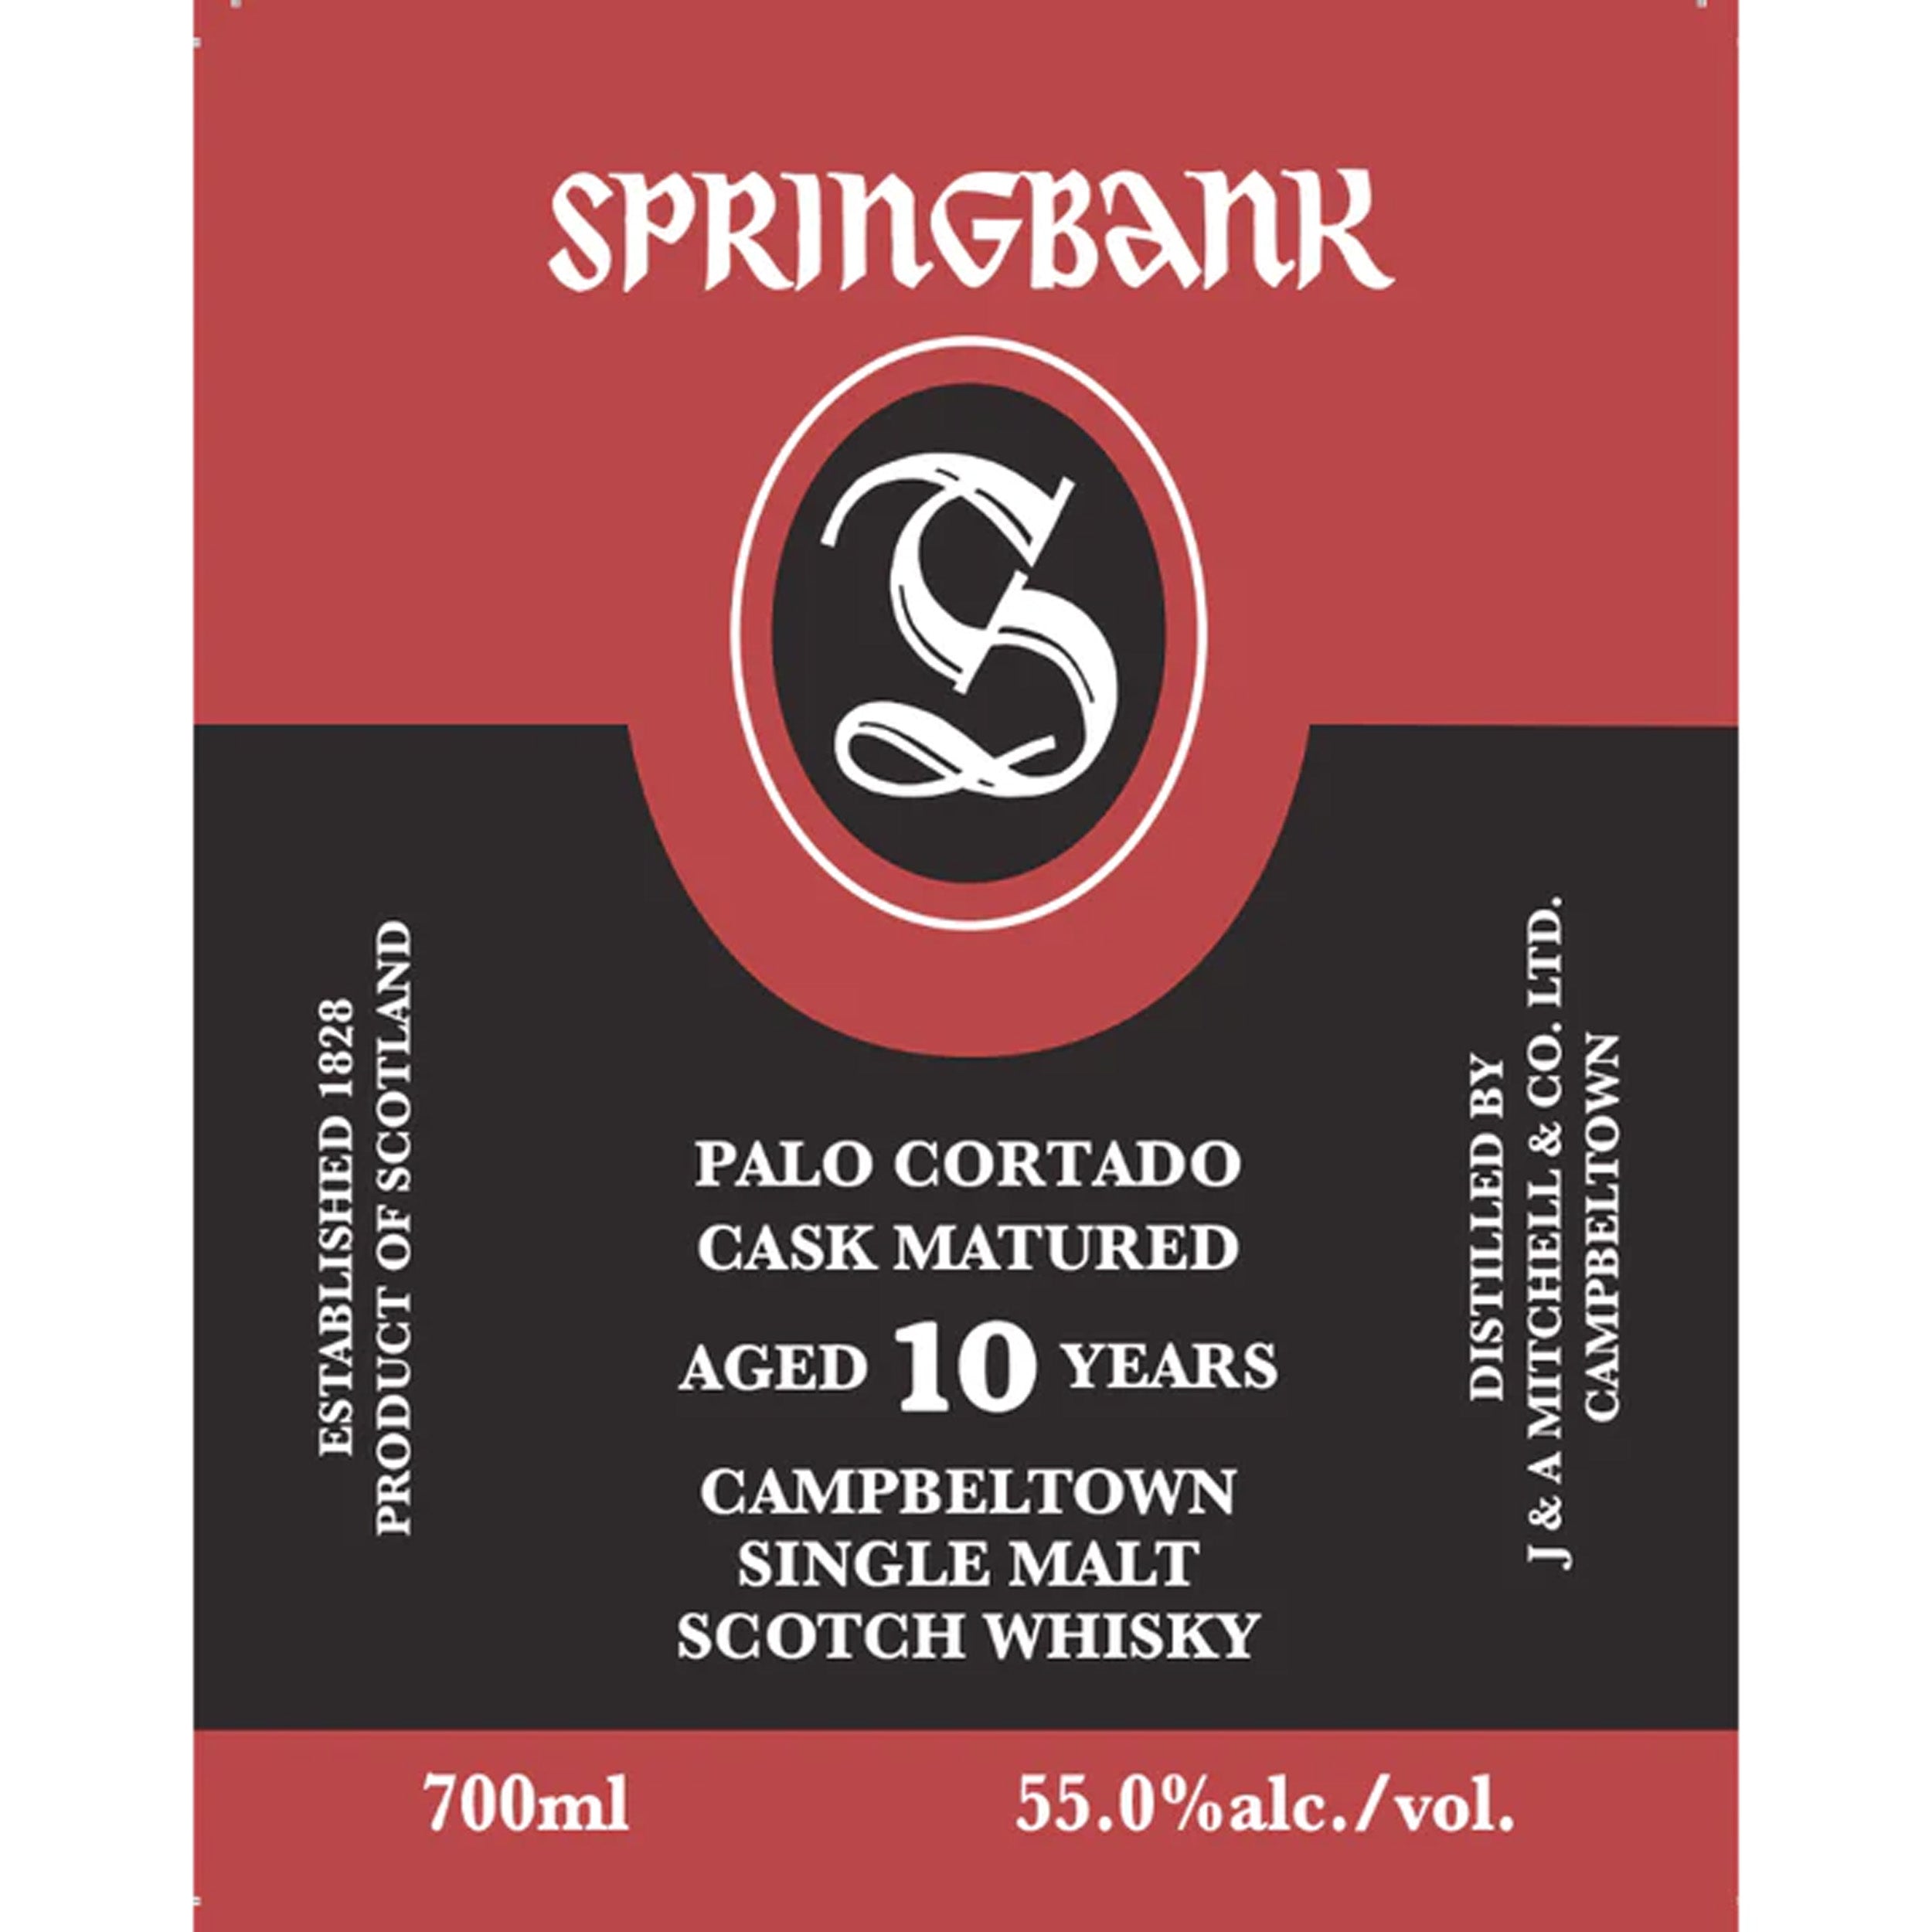 Springbank Palo Cortado Cask Matured 10 Year Old Scotch Whisky